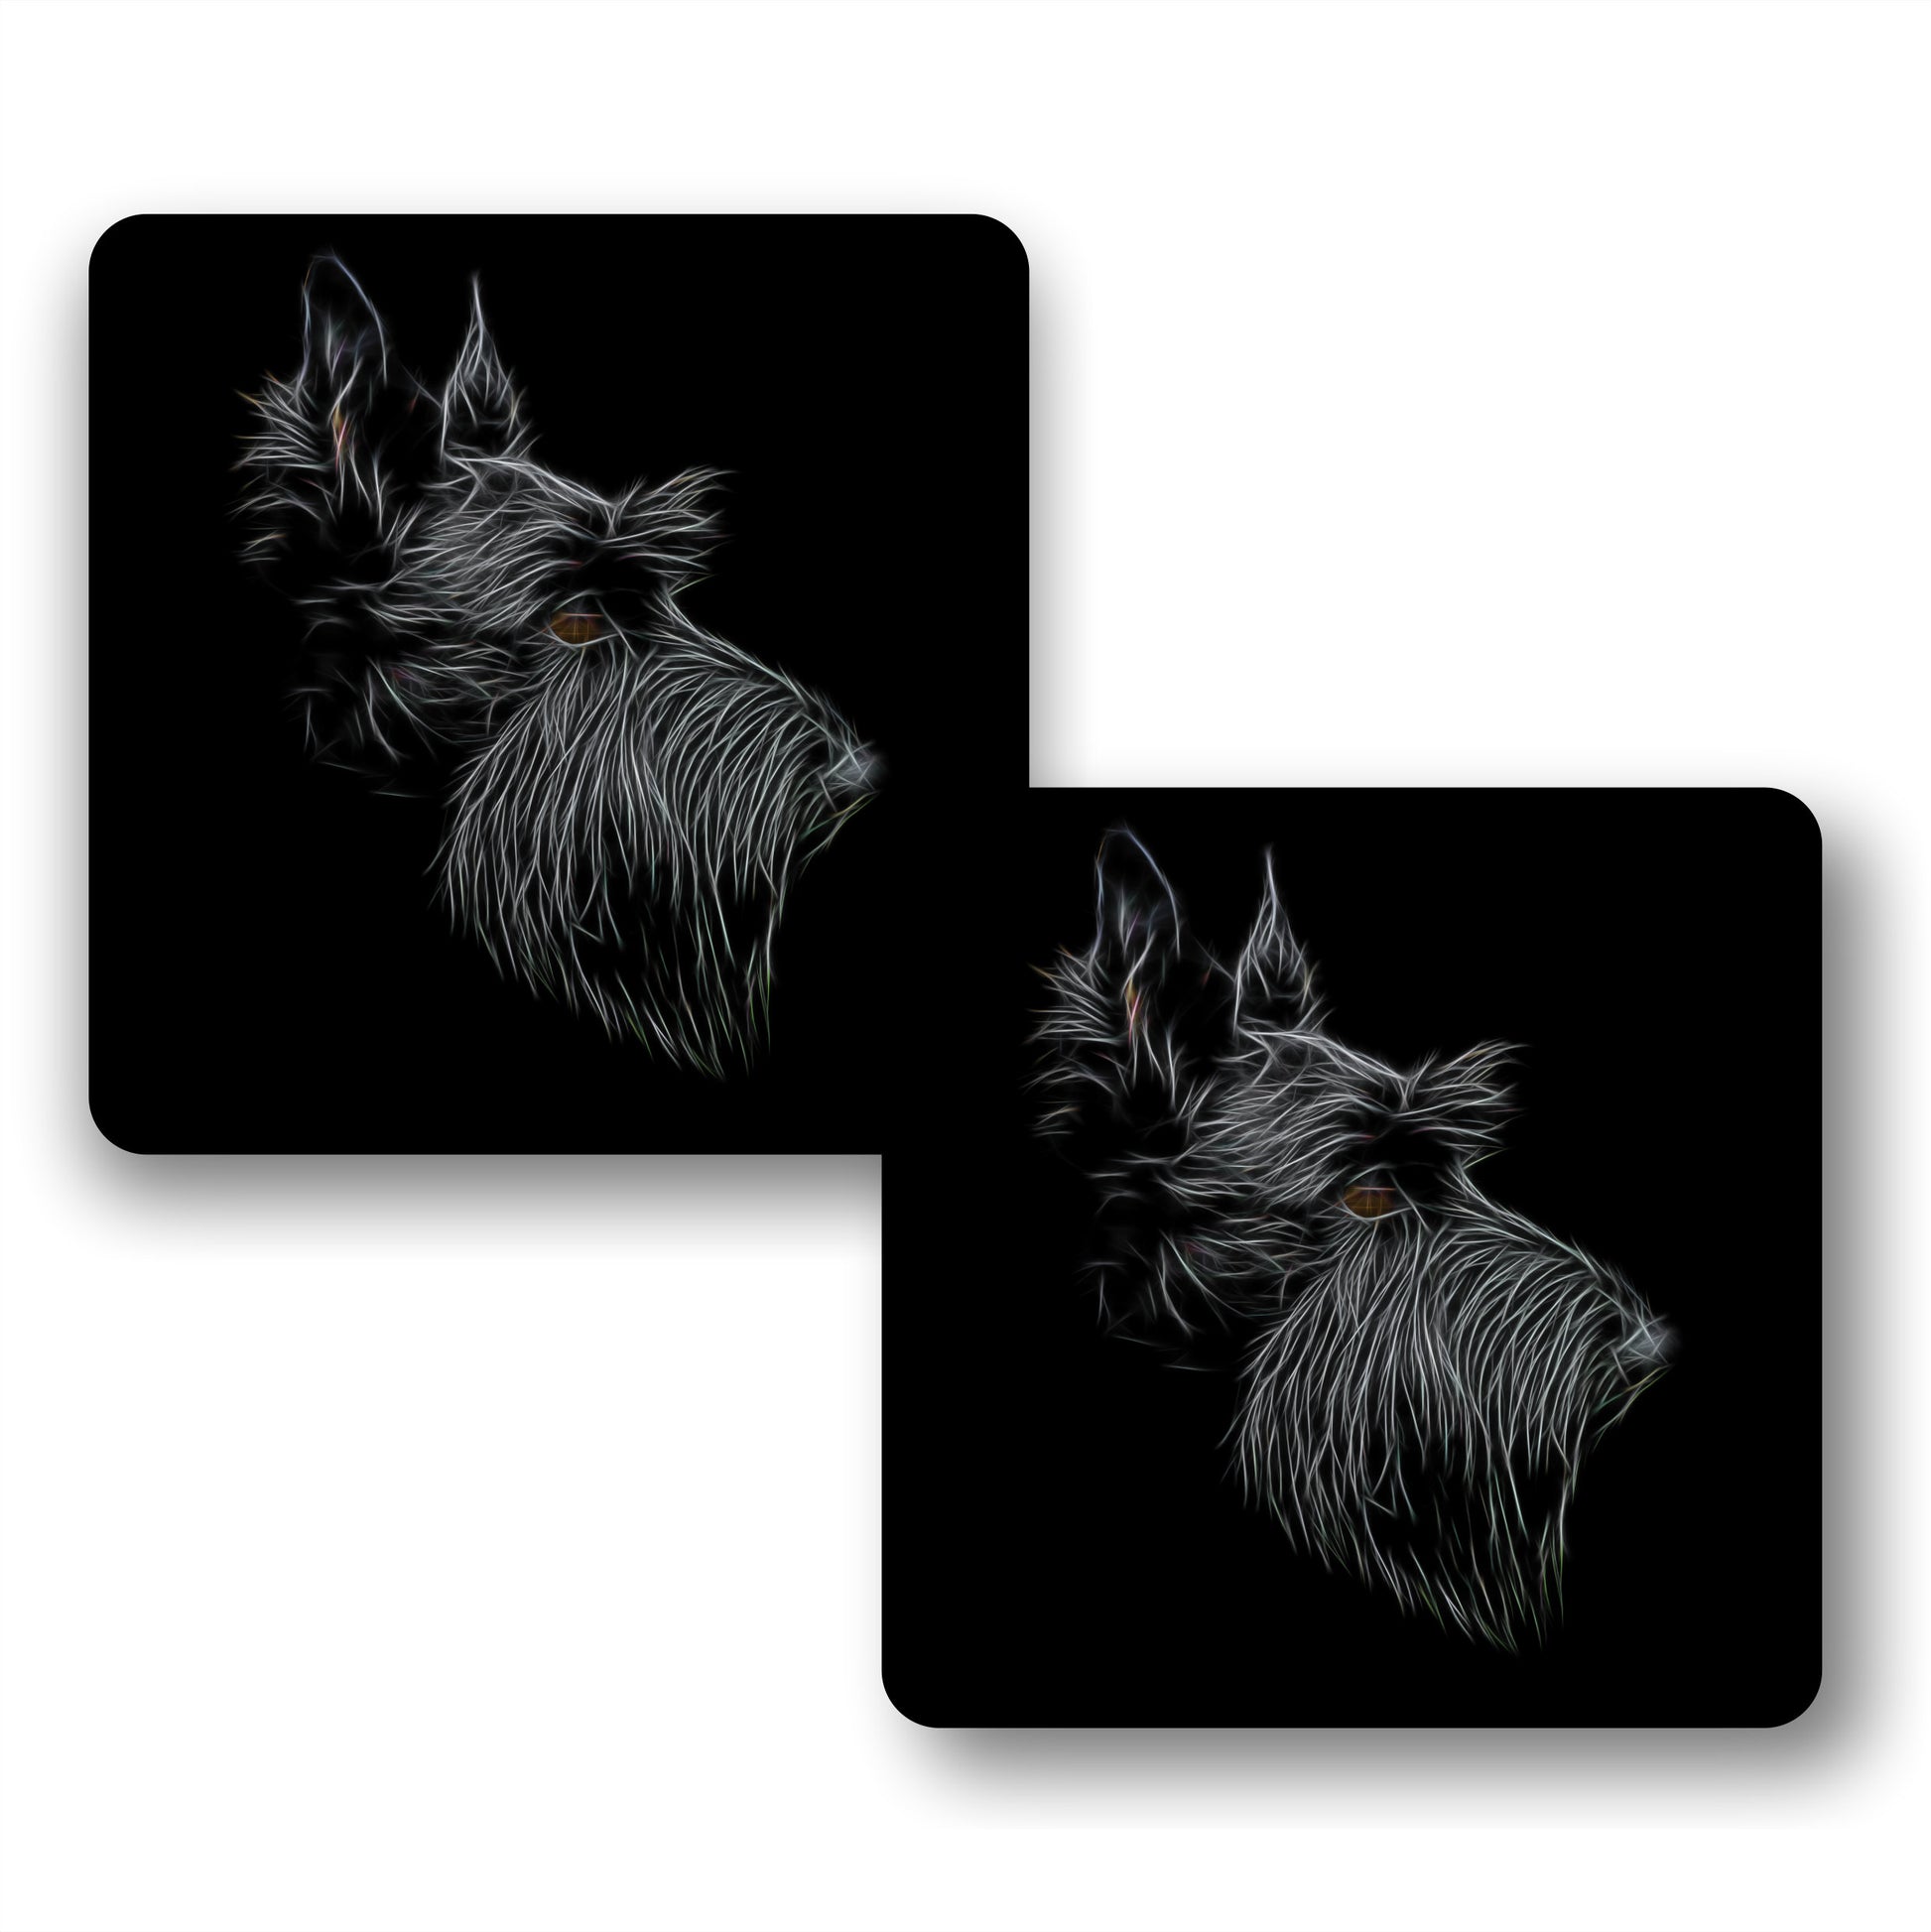 Scottish Terrier Coasters, Set of 2, with Stunning Fractal Art Design.